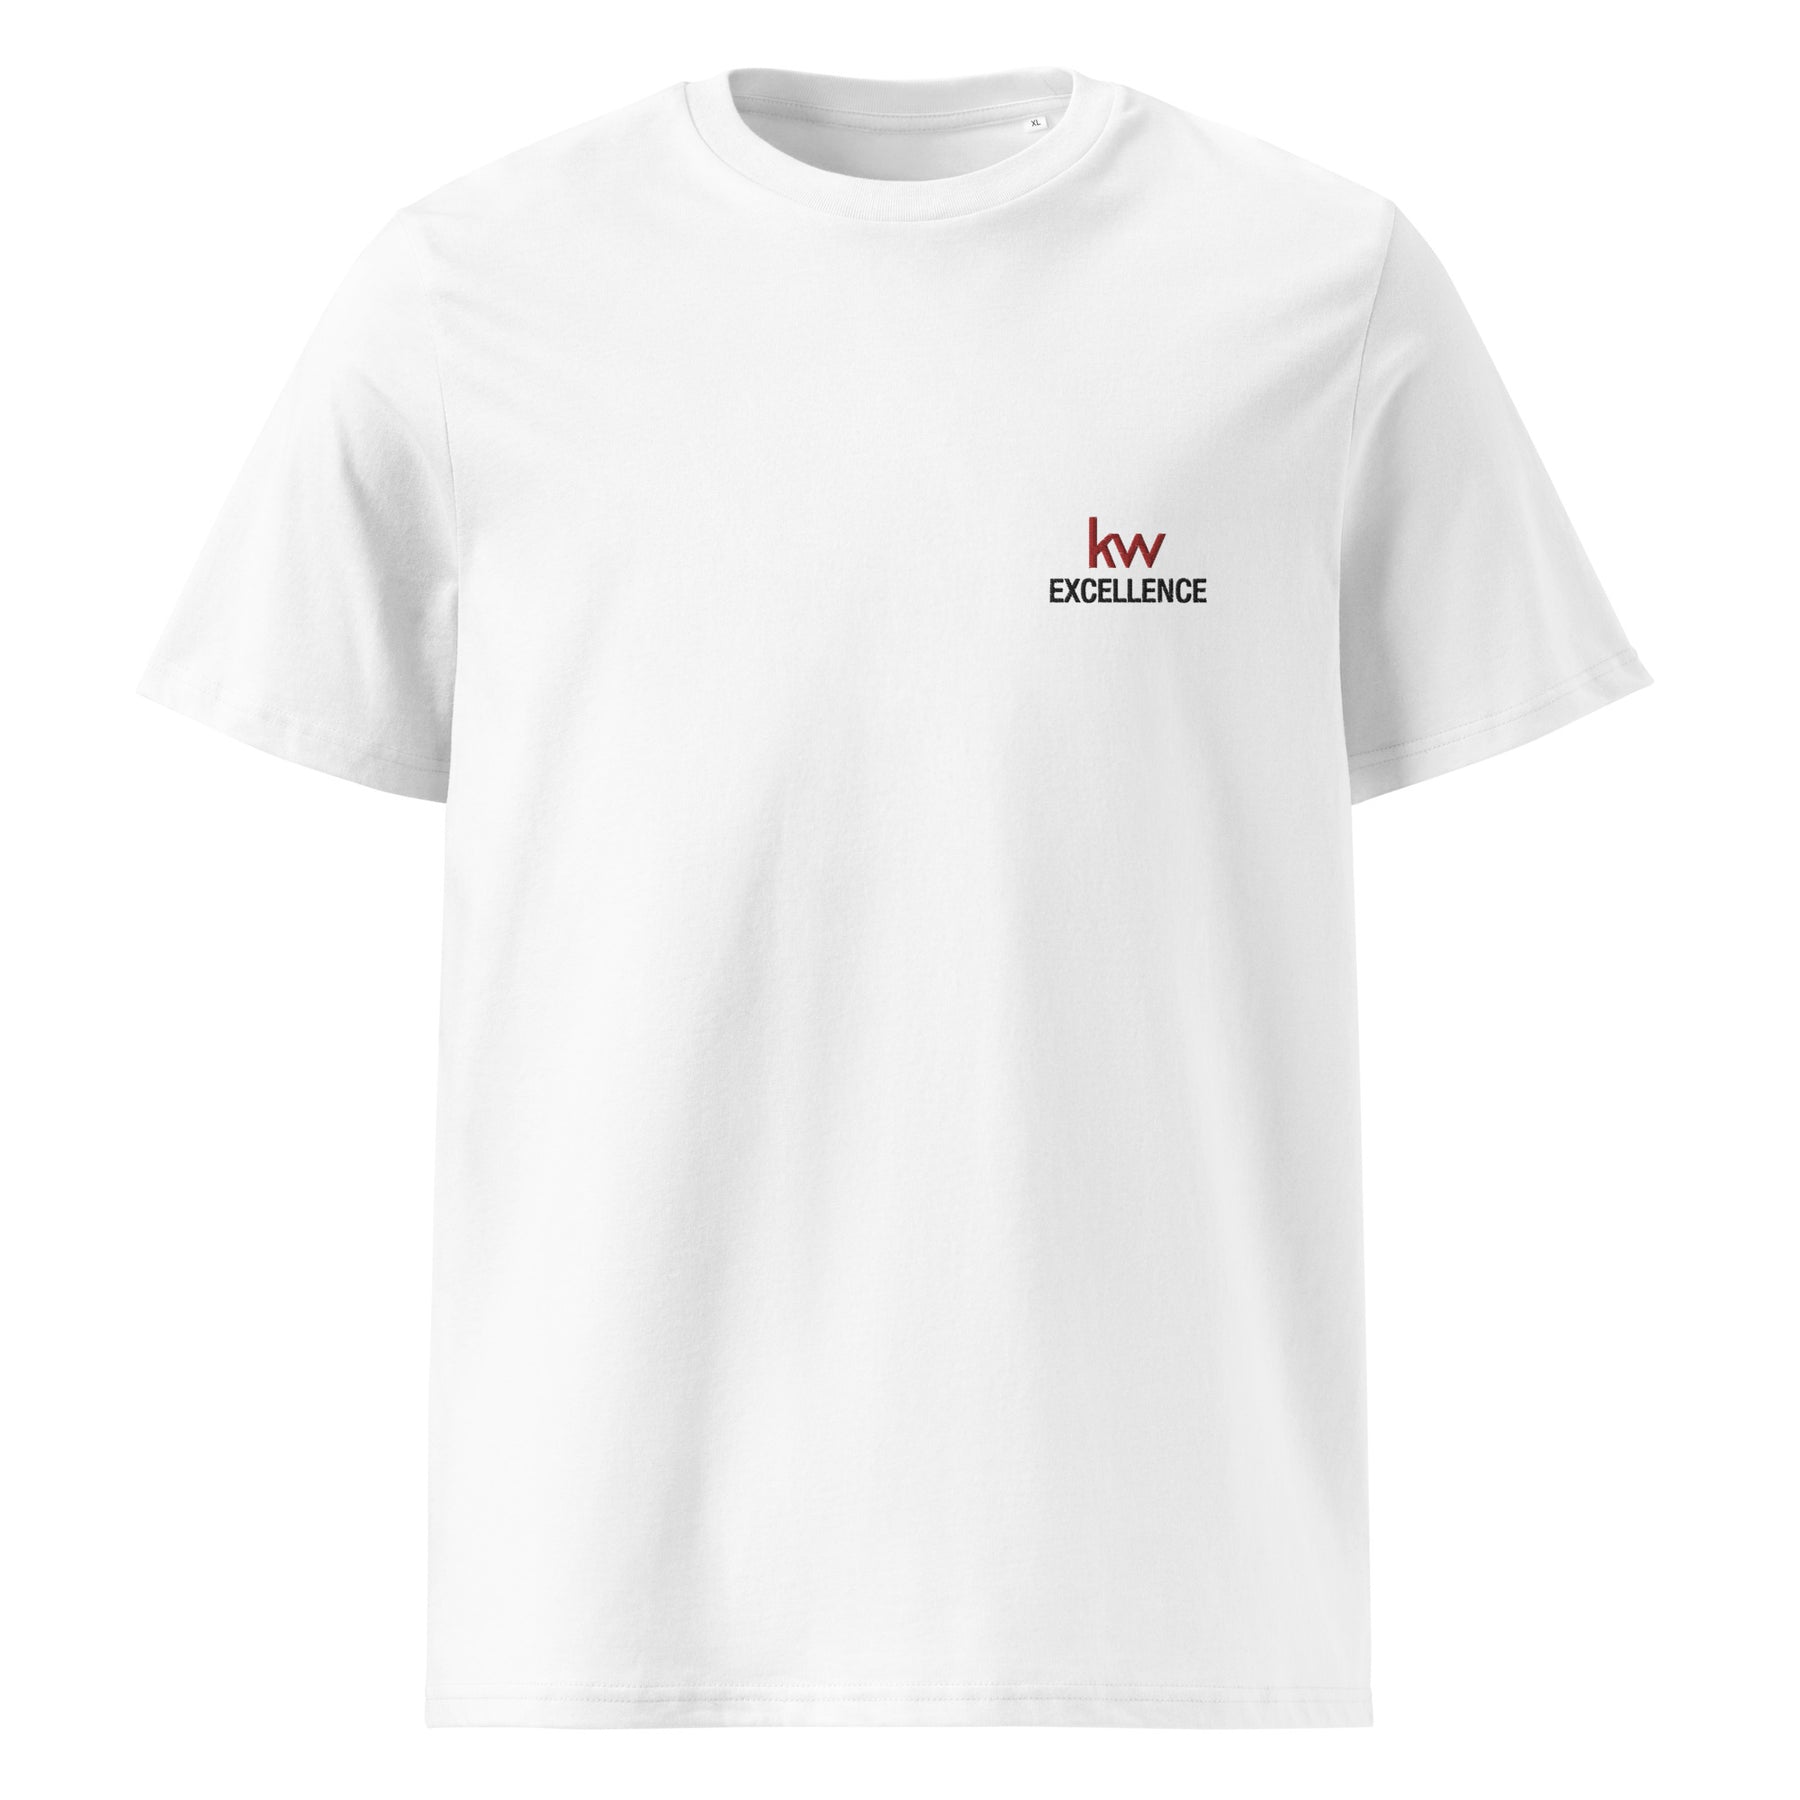 T-Shirt Unisexe Brodé - KW Excellence